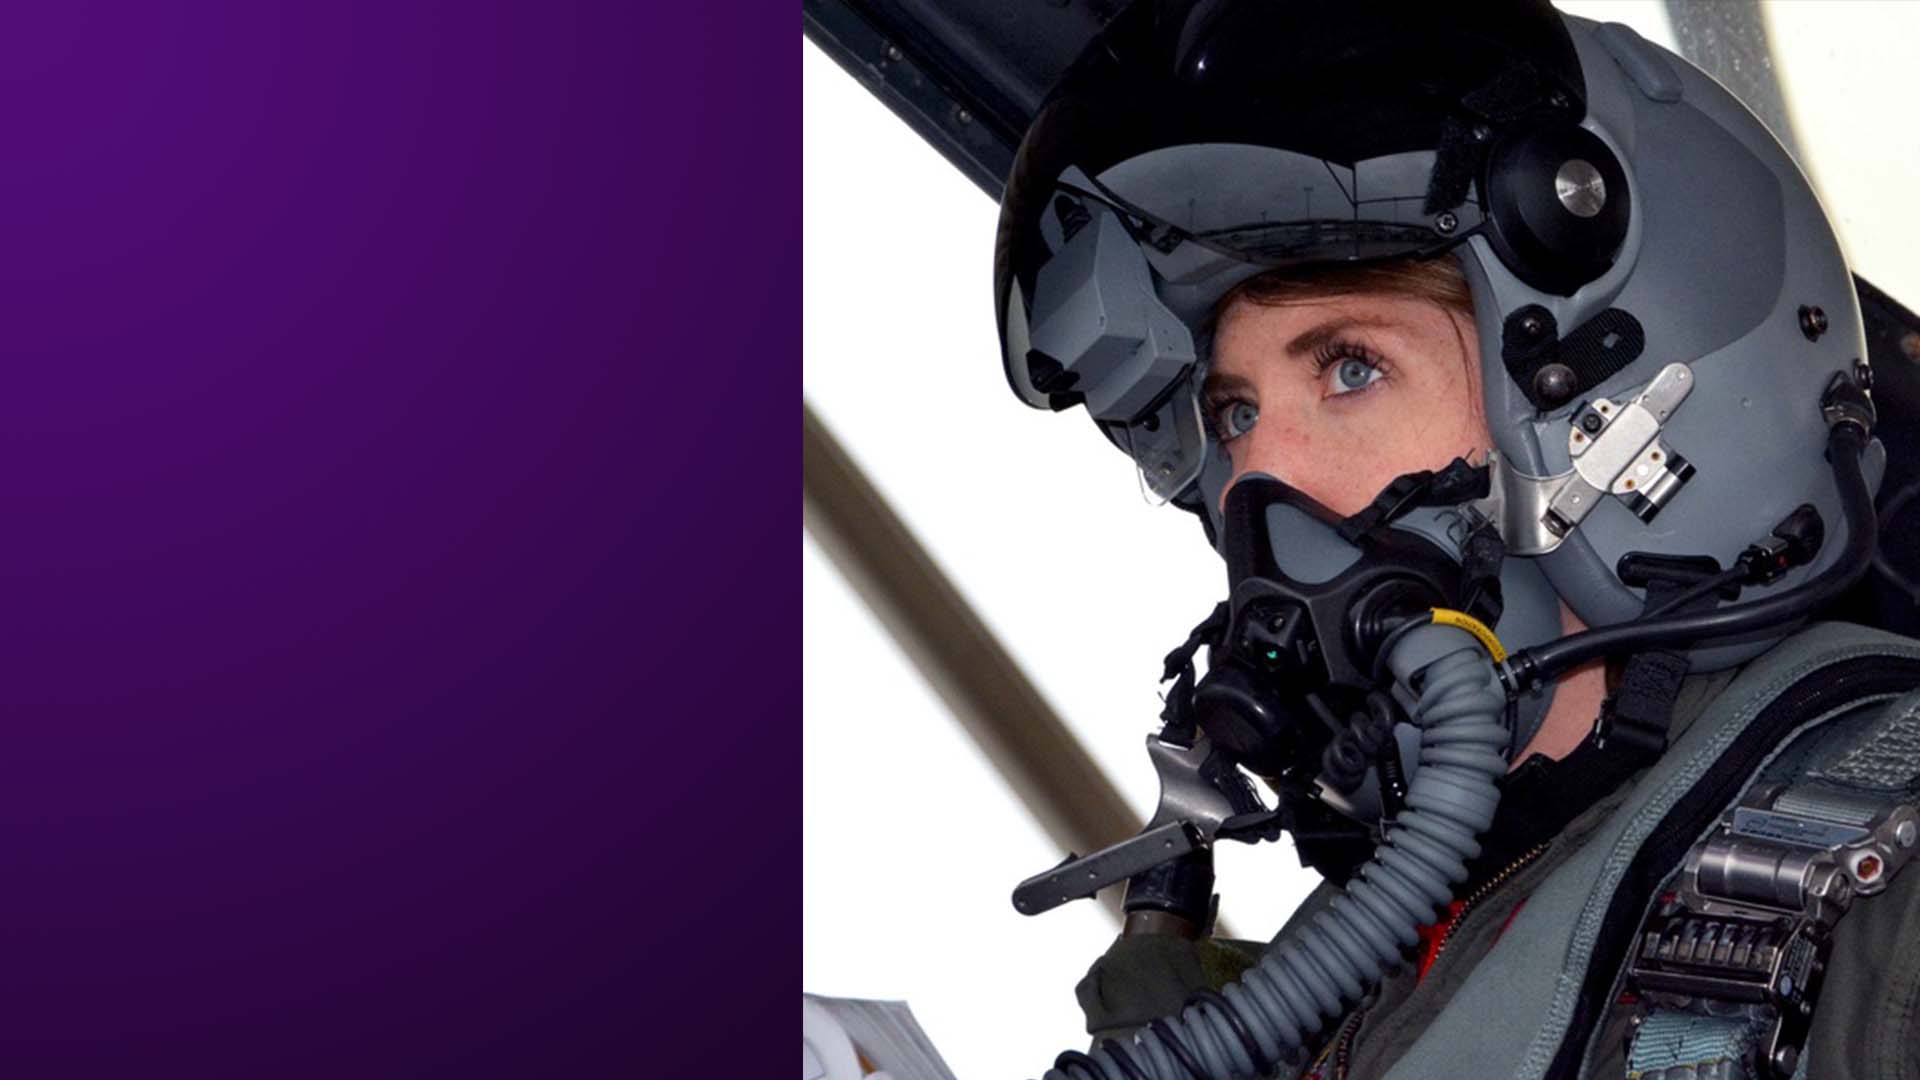 Maj. Michelle Curran in flight helmet